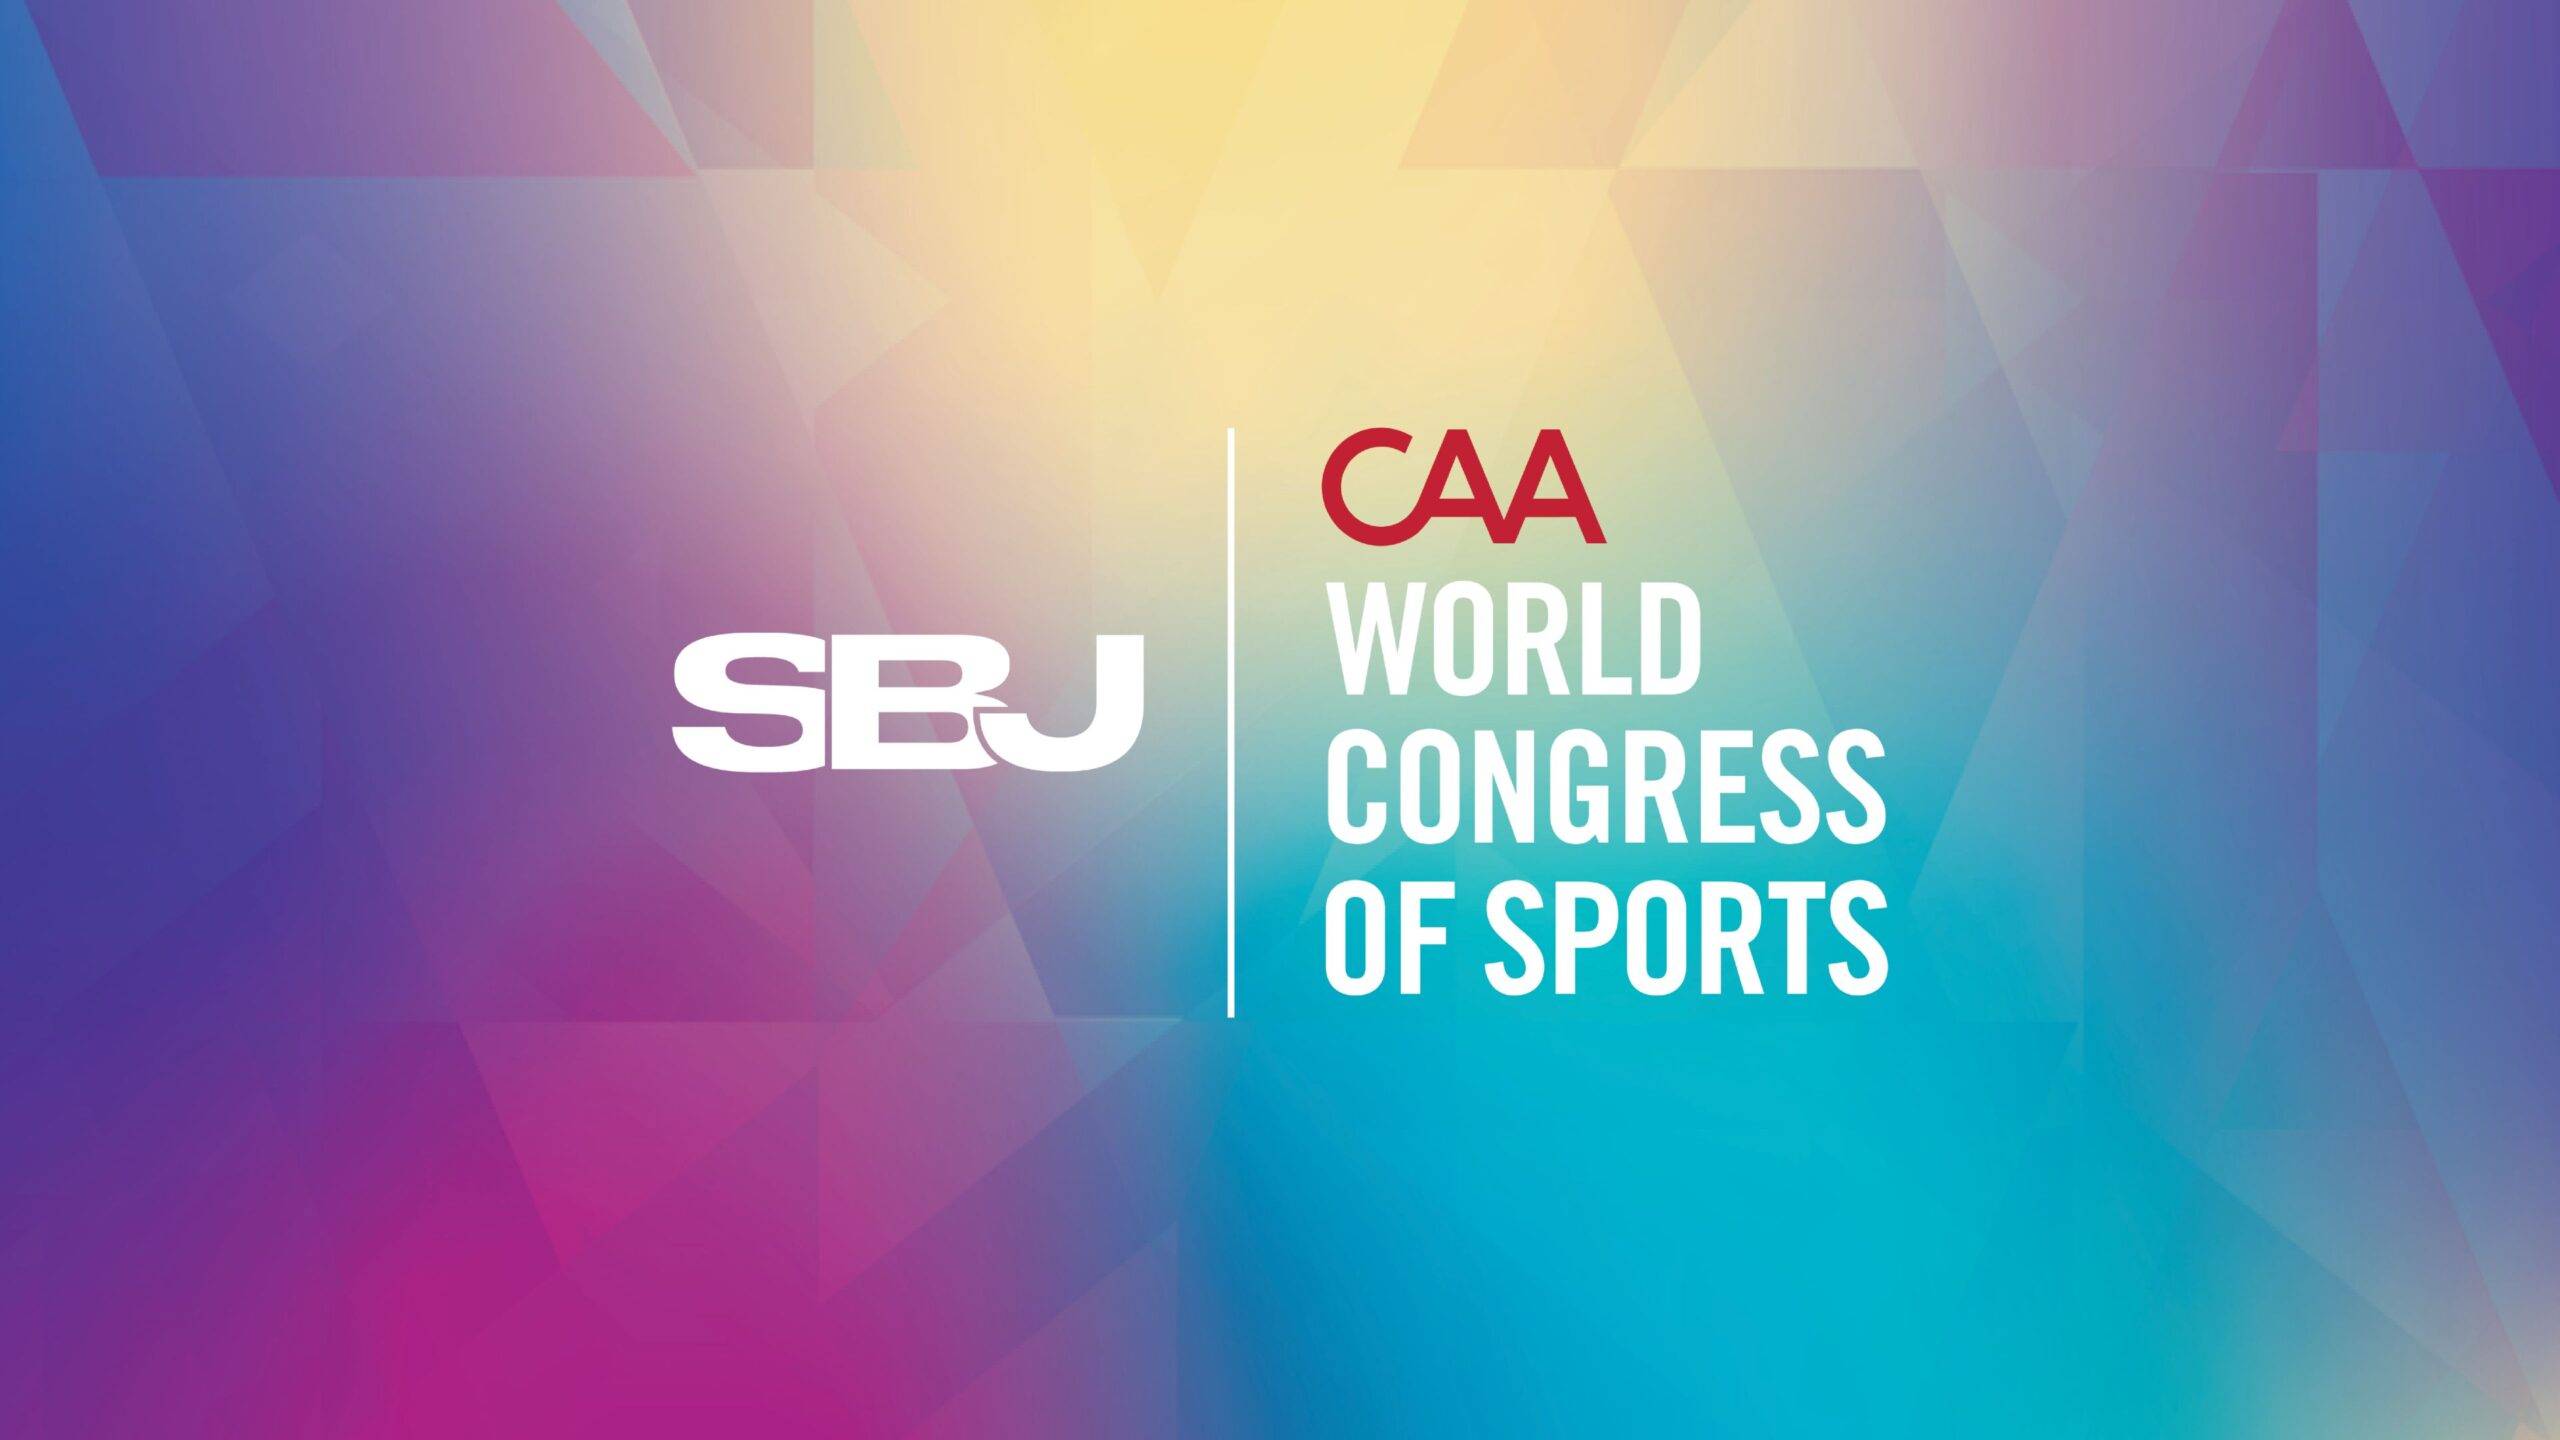 SBJ CAA World Congress of Sports